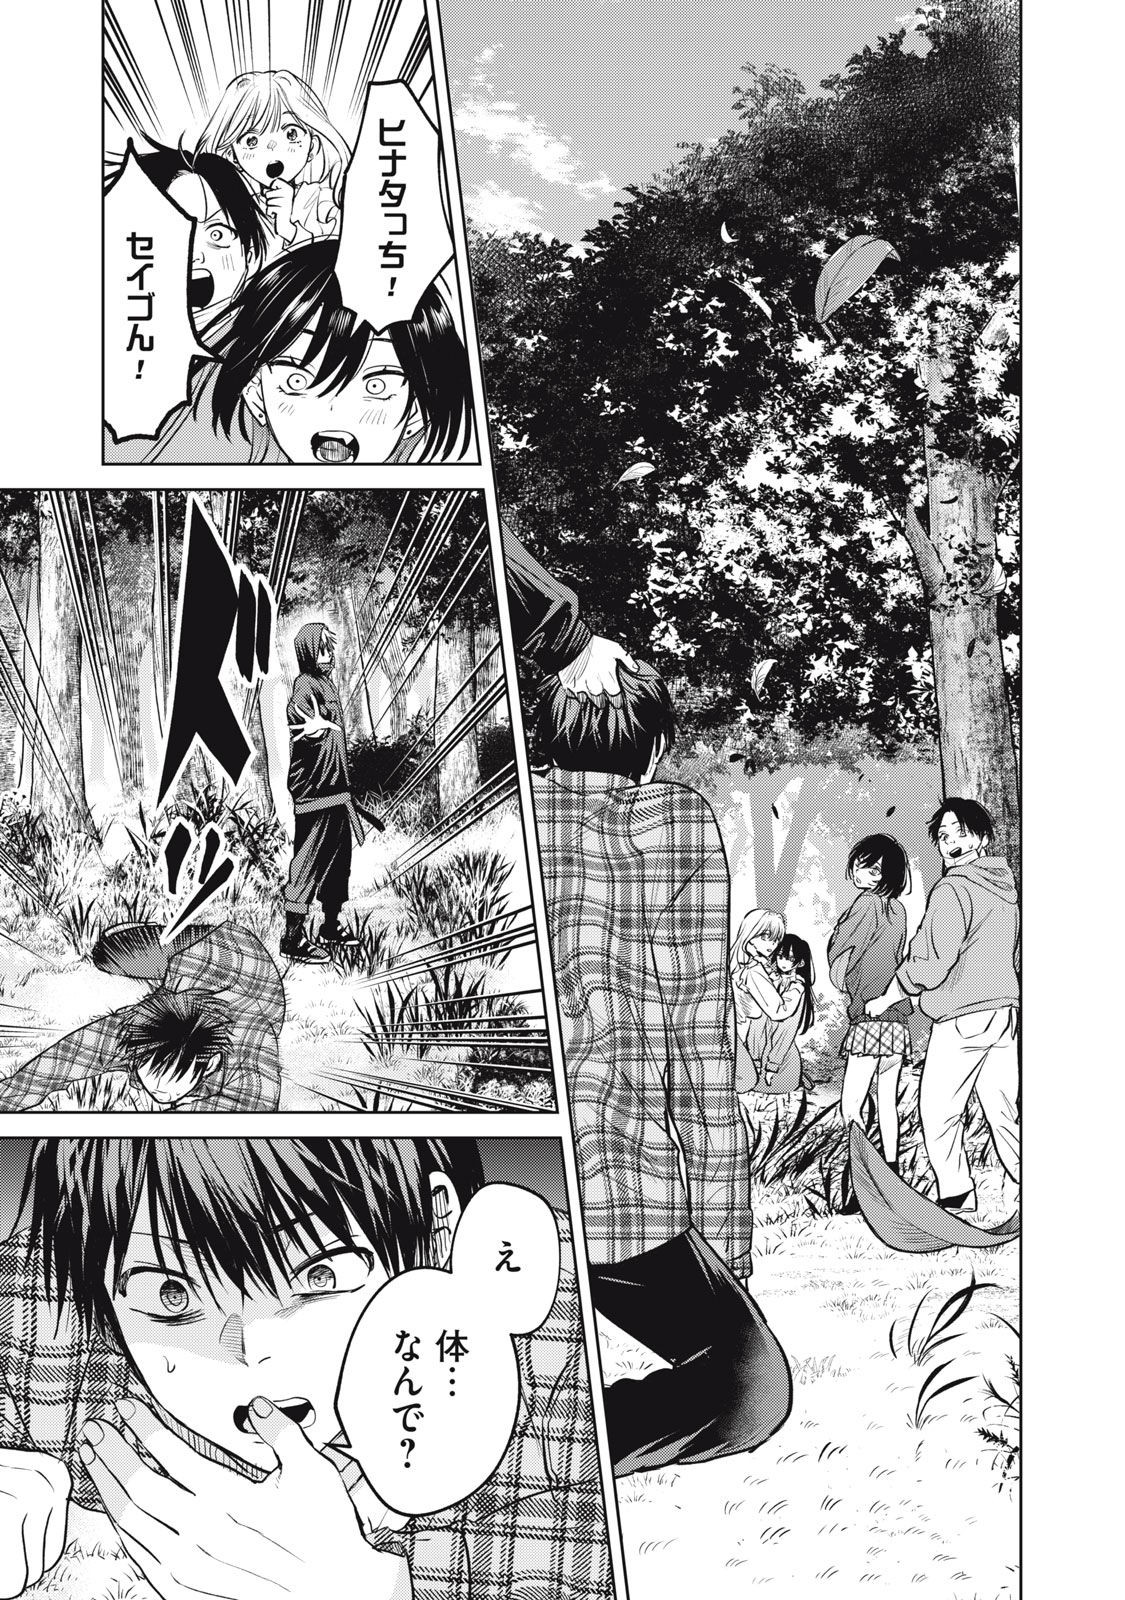 Shikabane-zE - Chapter 15 - Page 13